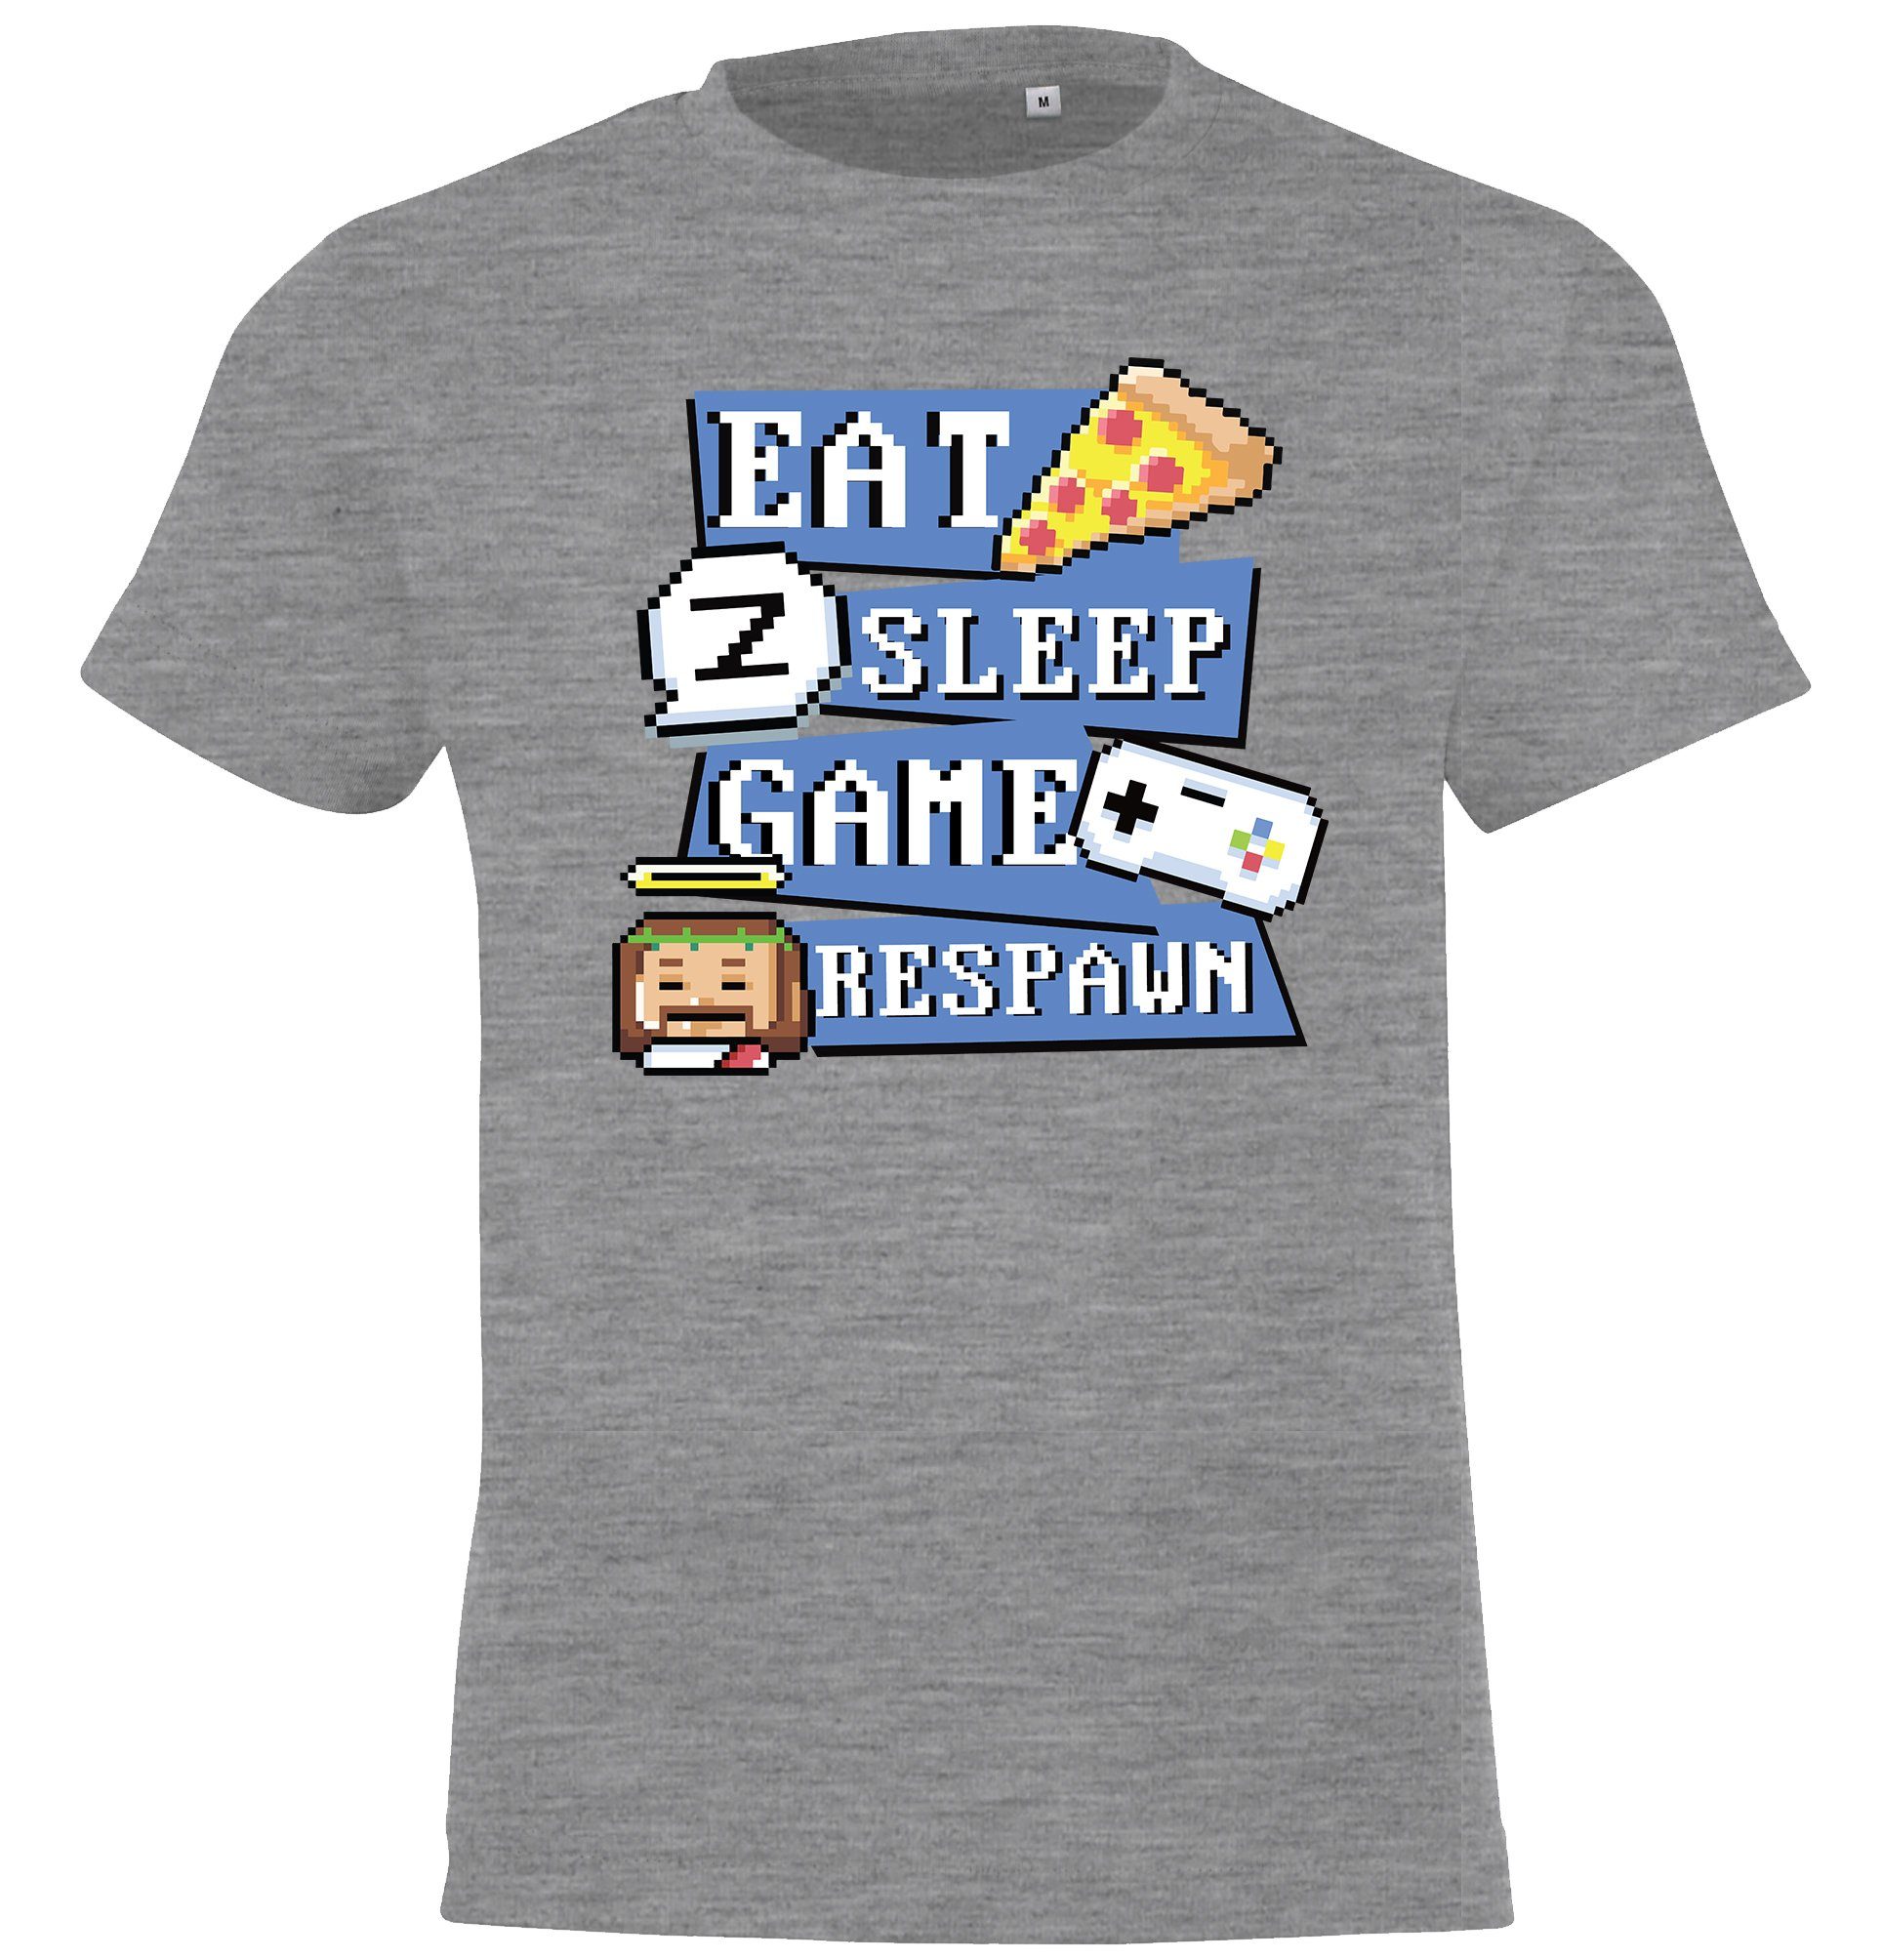 Youth Designz T-Shirt "Eat, Game, Sleep, Respawn" Kinder Shirt mit trendigem Frontprint Grau | T-Shirts